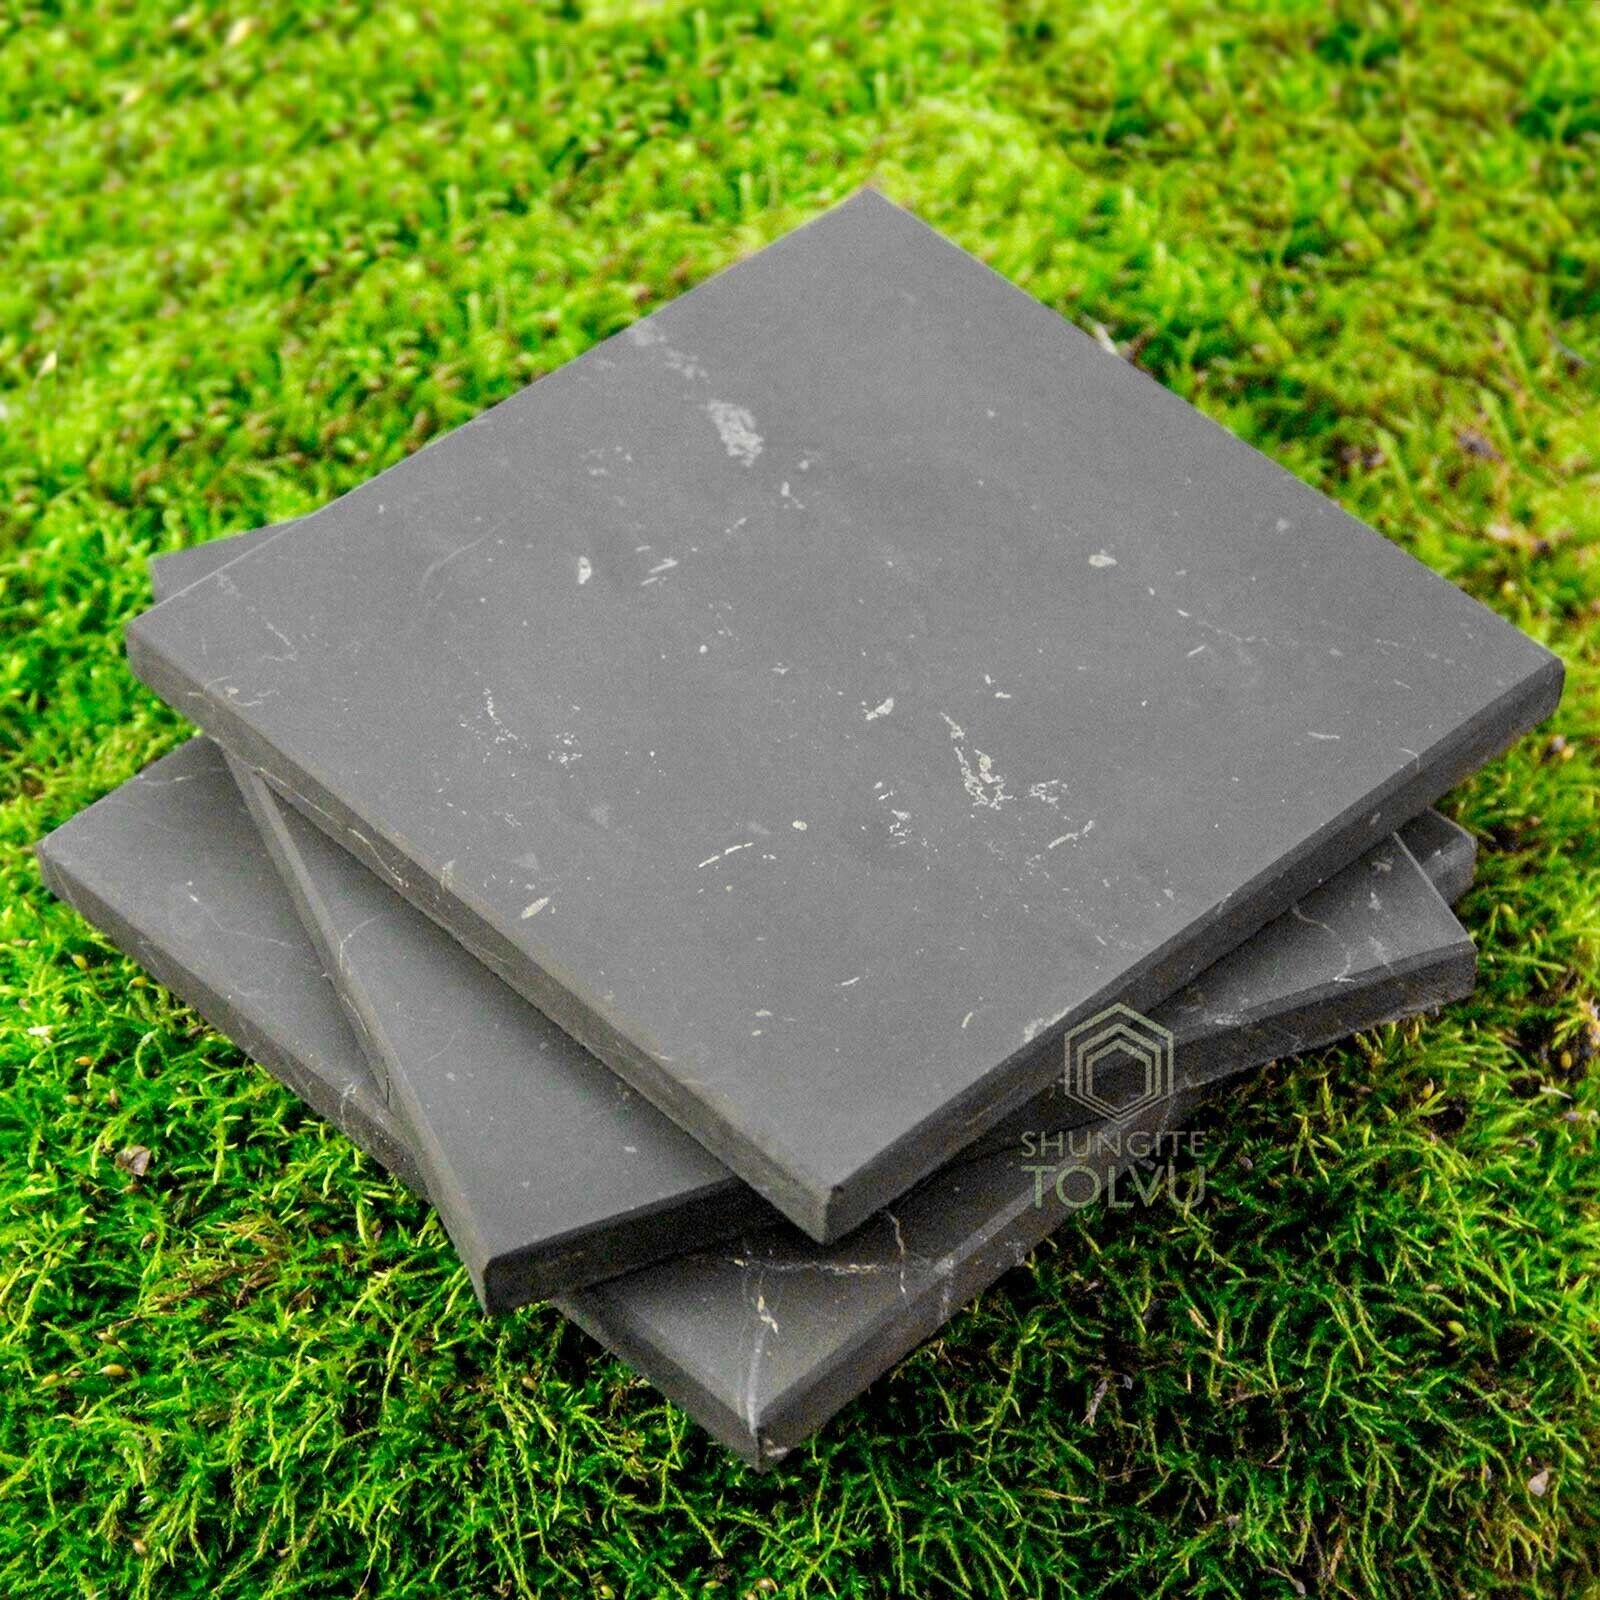 Shungite Tiles Big Size Square shape 4 tot 4 inches, EMF protection stone, Tolvu